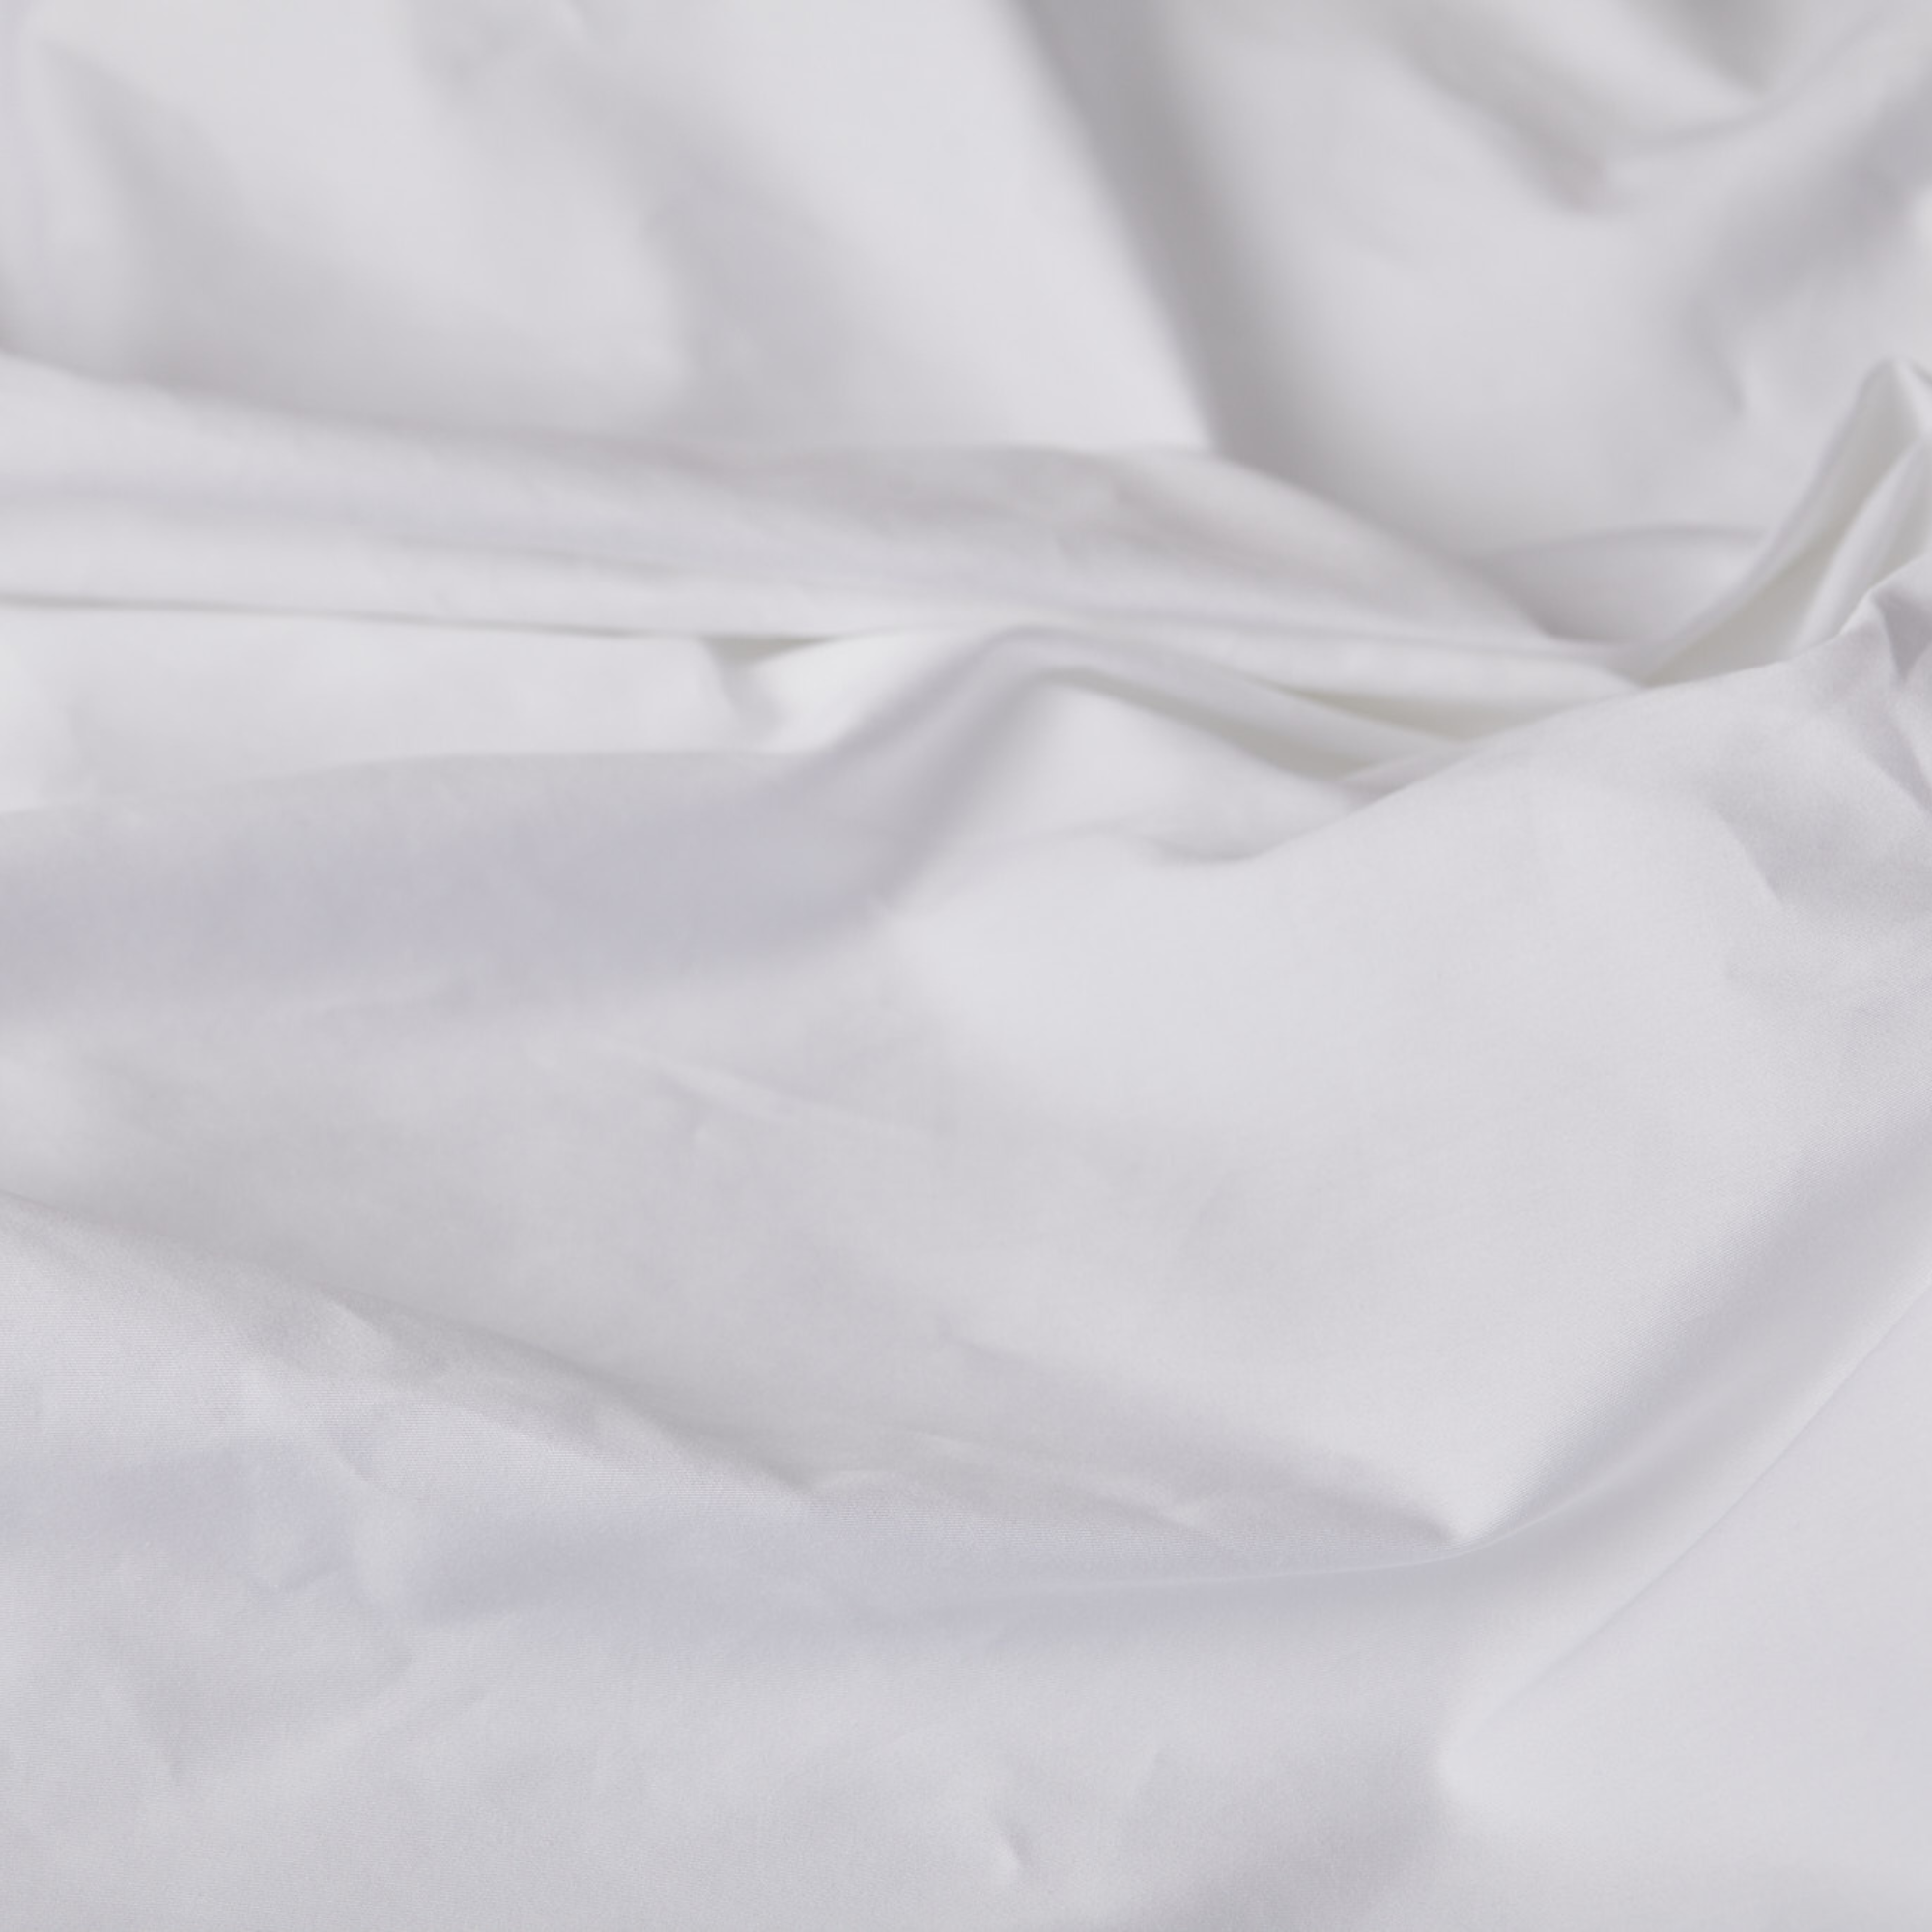 Cotton Rich Fabric Close Up White